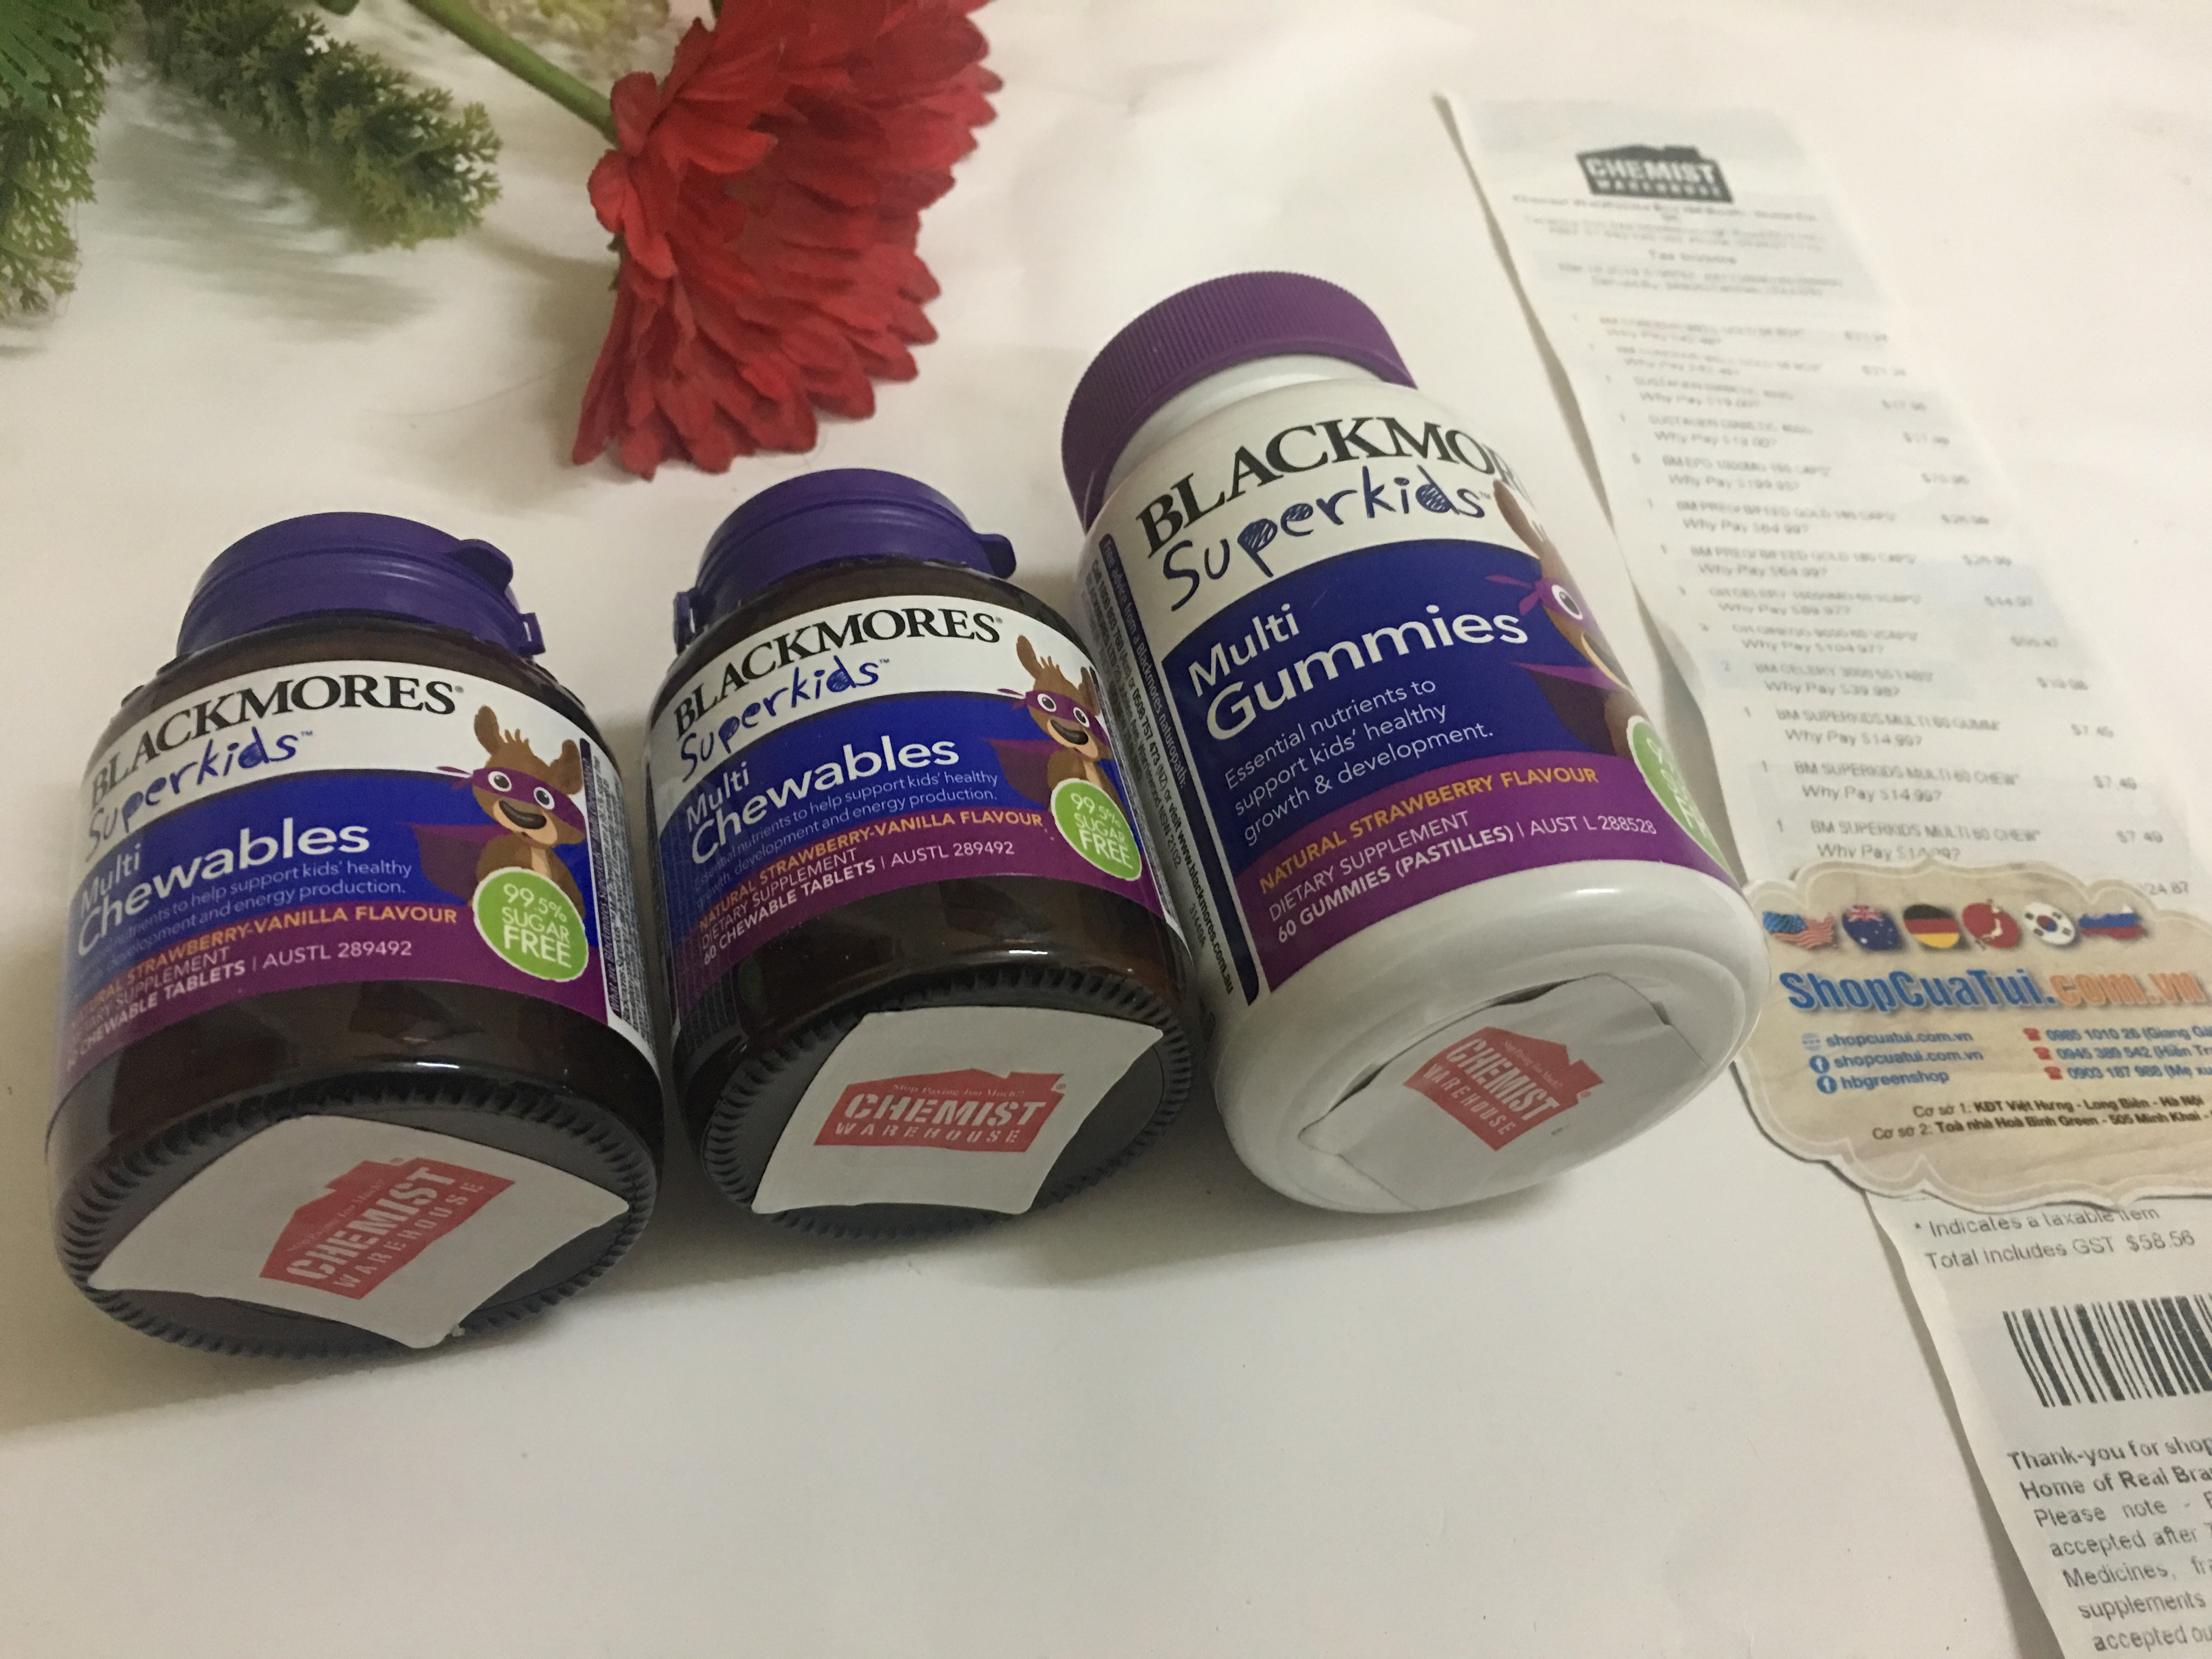 Kẹo nhai chewables Vitamin cho trẻ em Blackmores Superkids Multi 60 Viên